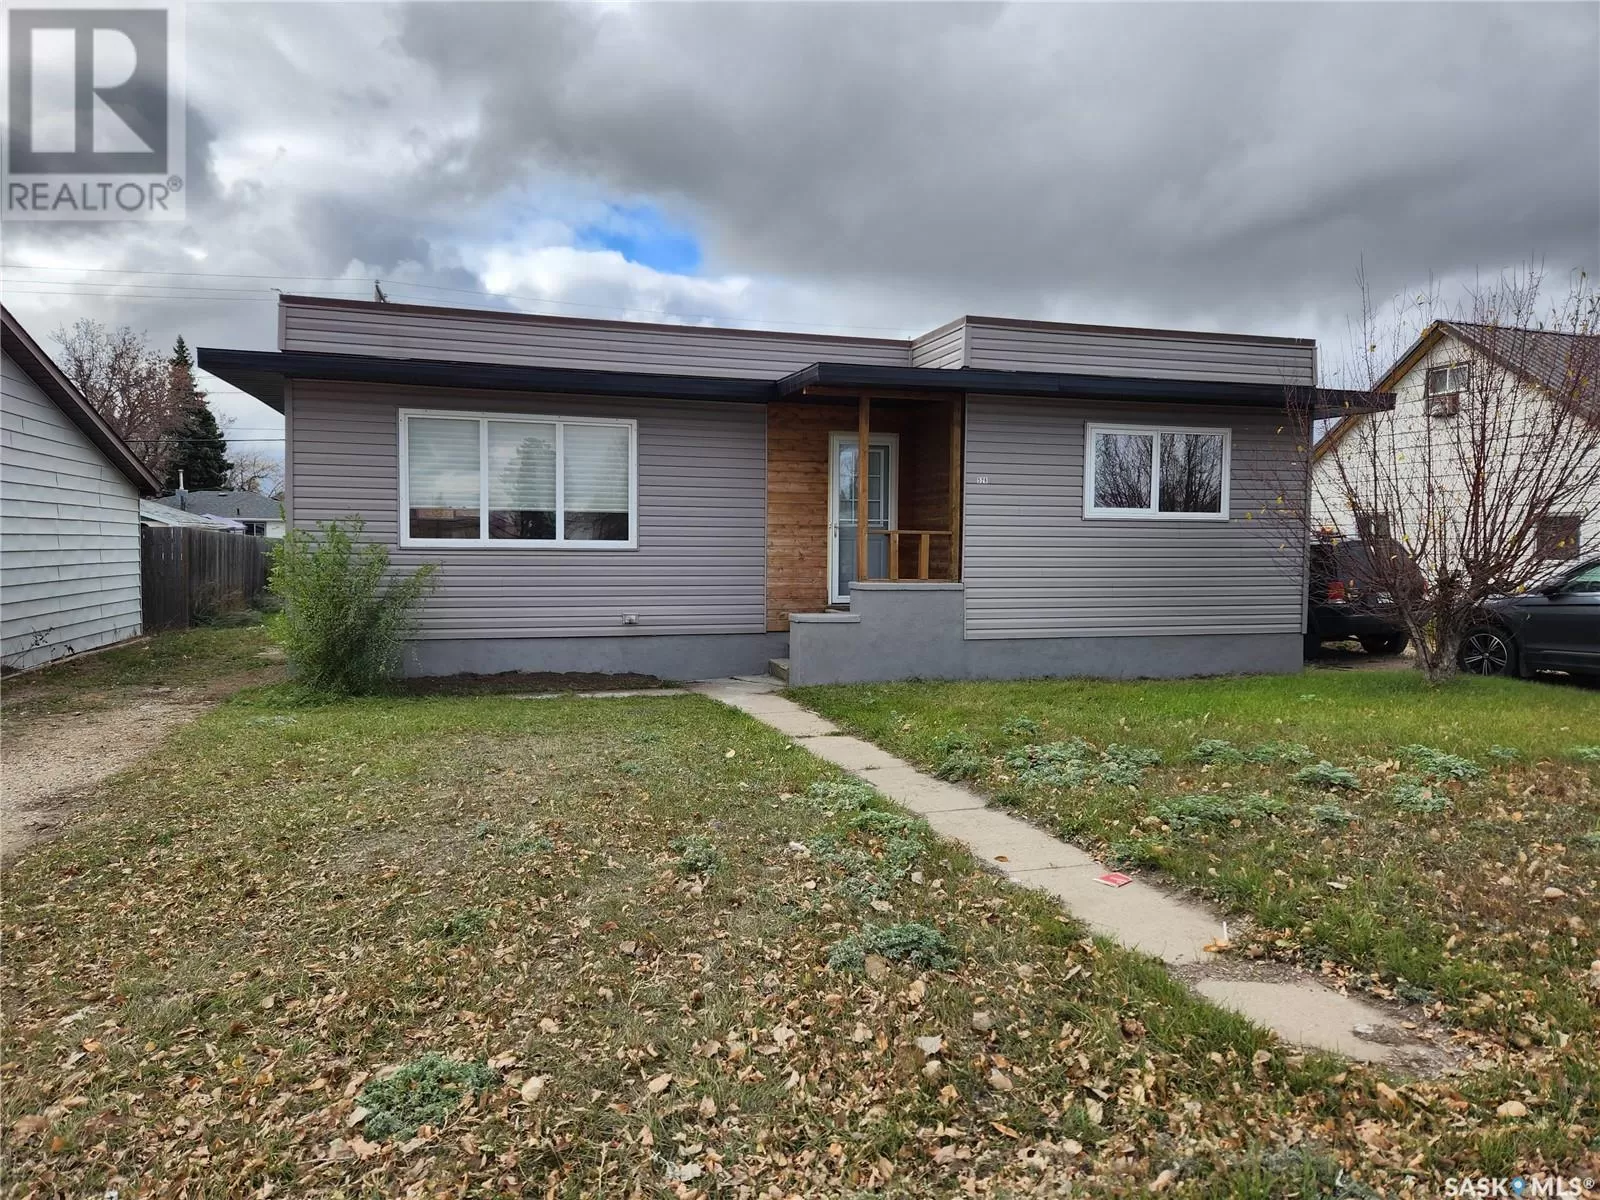 House for rent: 526 Fourth Street, Estevan, Saskatchewan S4A 0V3